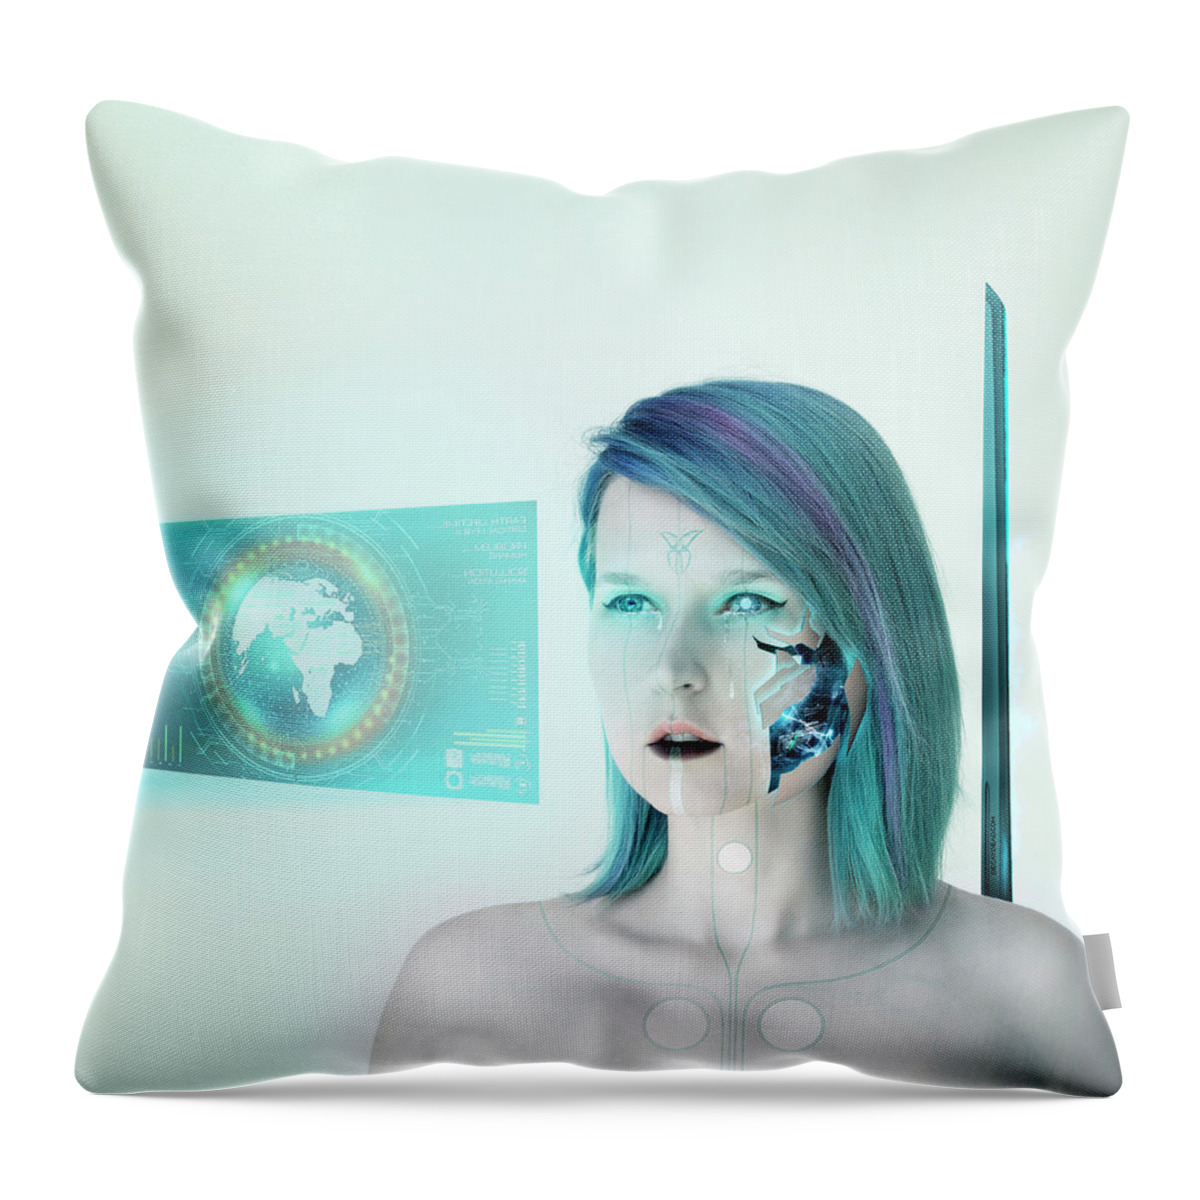 Argus Dorian Throw Pillow featuring the digital art THE AWAKENING Annihilation of human race by Argus Dorian